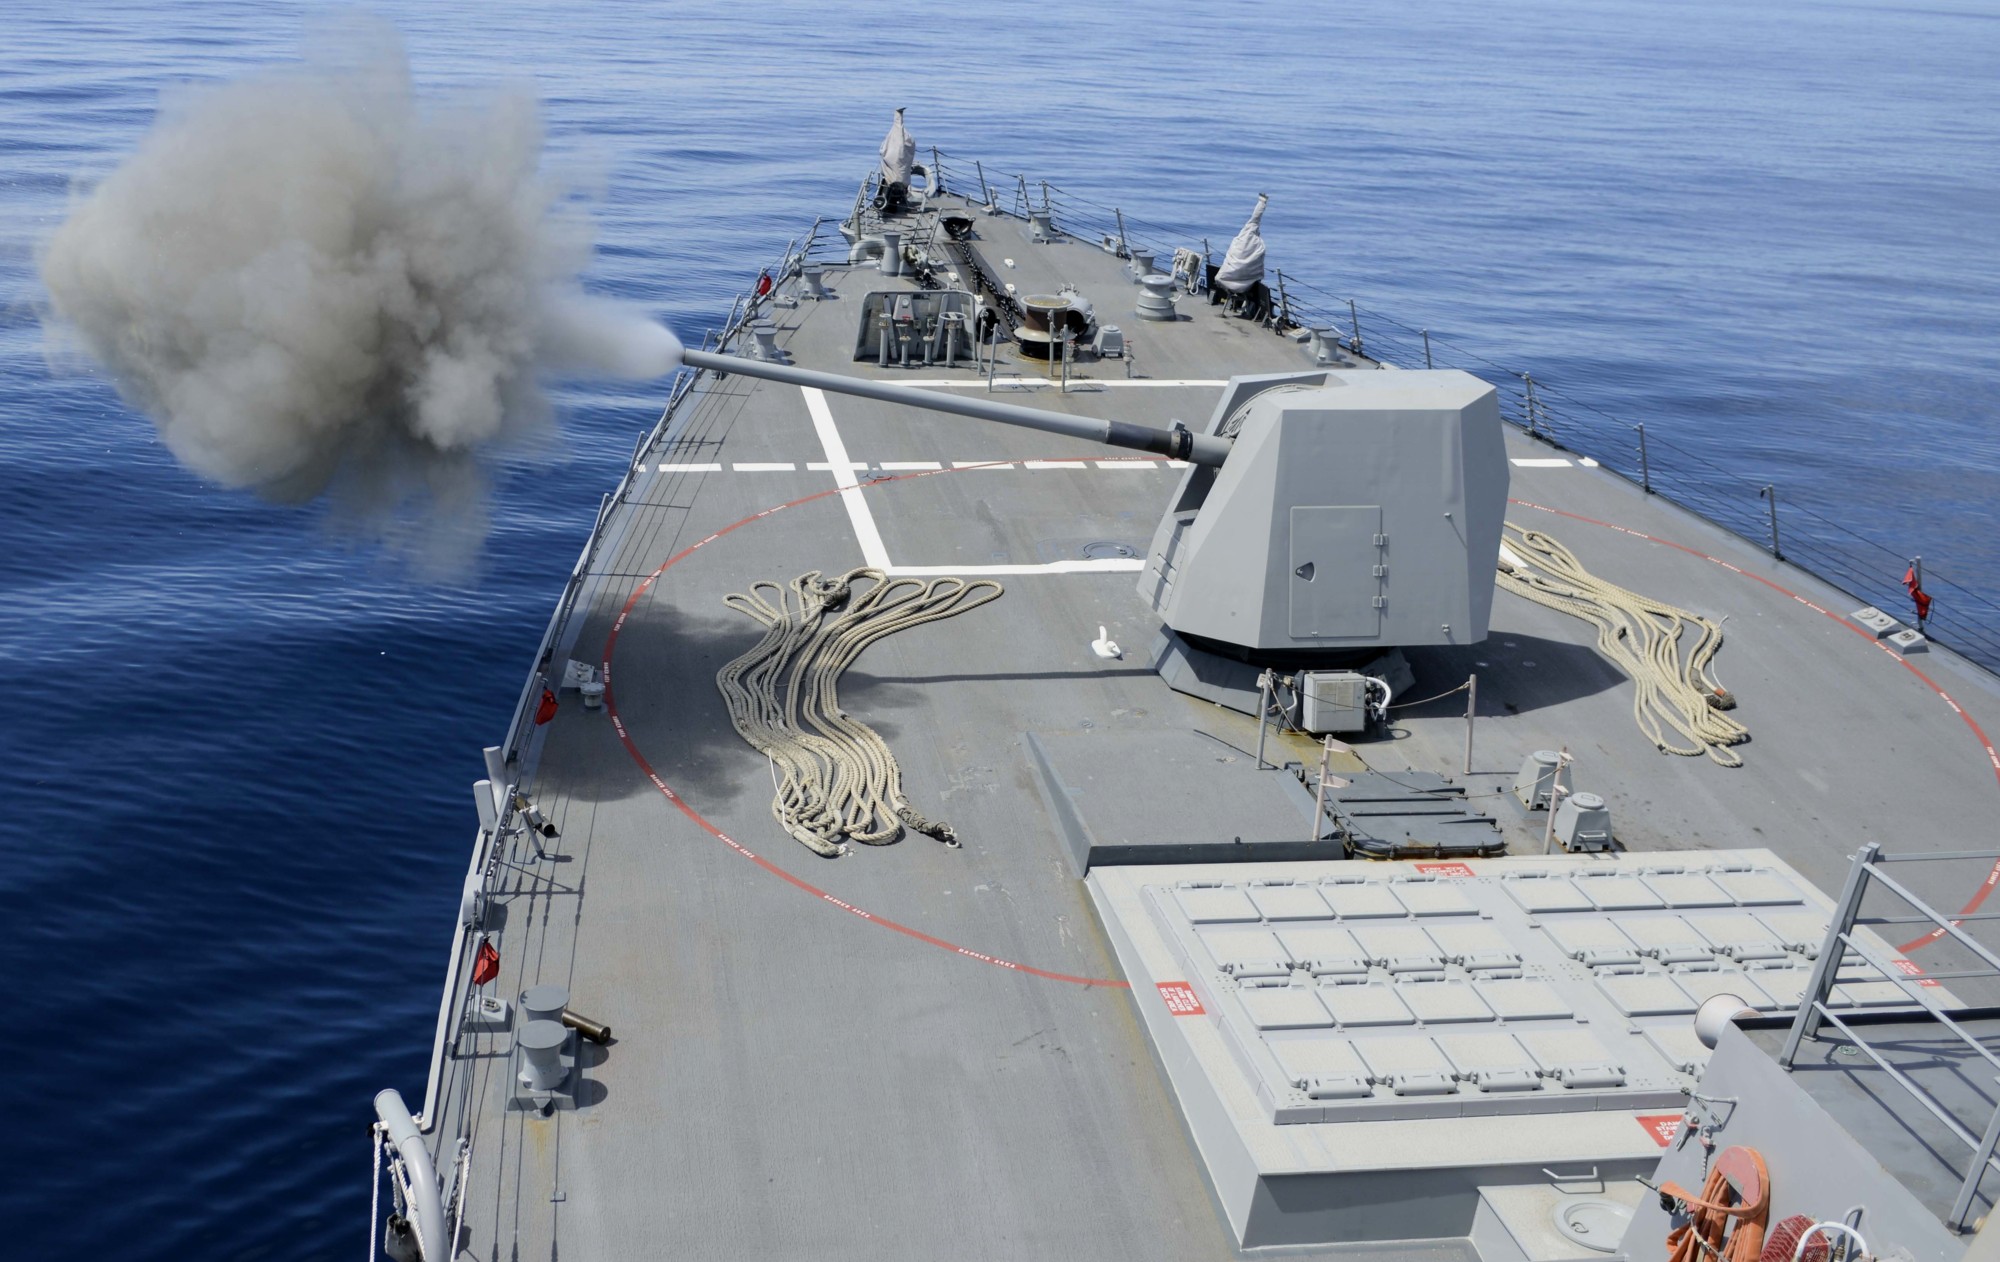 ddg-100 uss kidd arleigh burke class guided missile destroyer aegis us navy gun fire 31